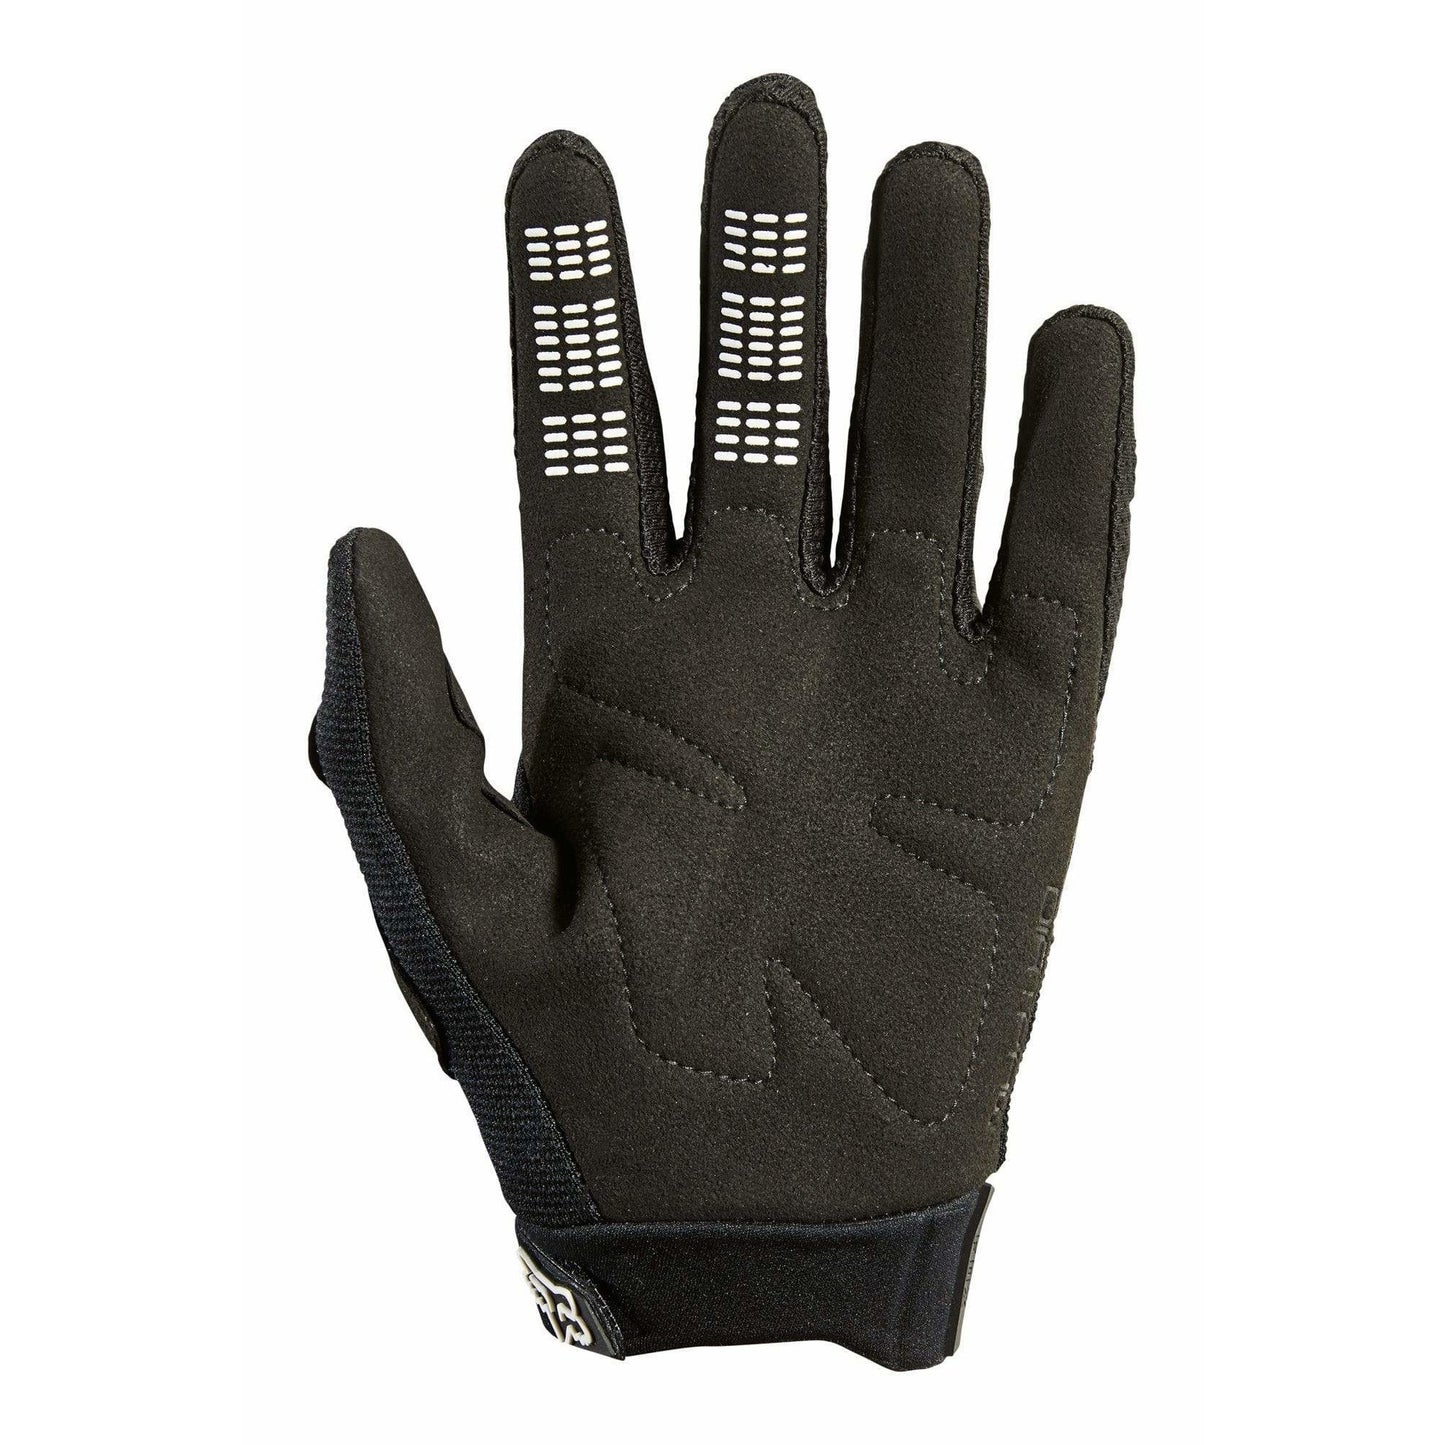 Fox Youth Dirtpaw Mountain Bike Gloves - Black/White